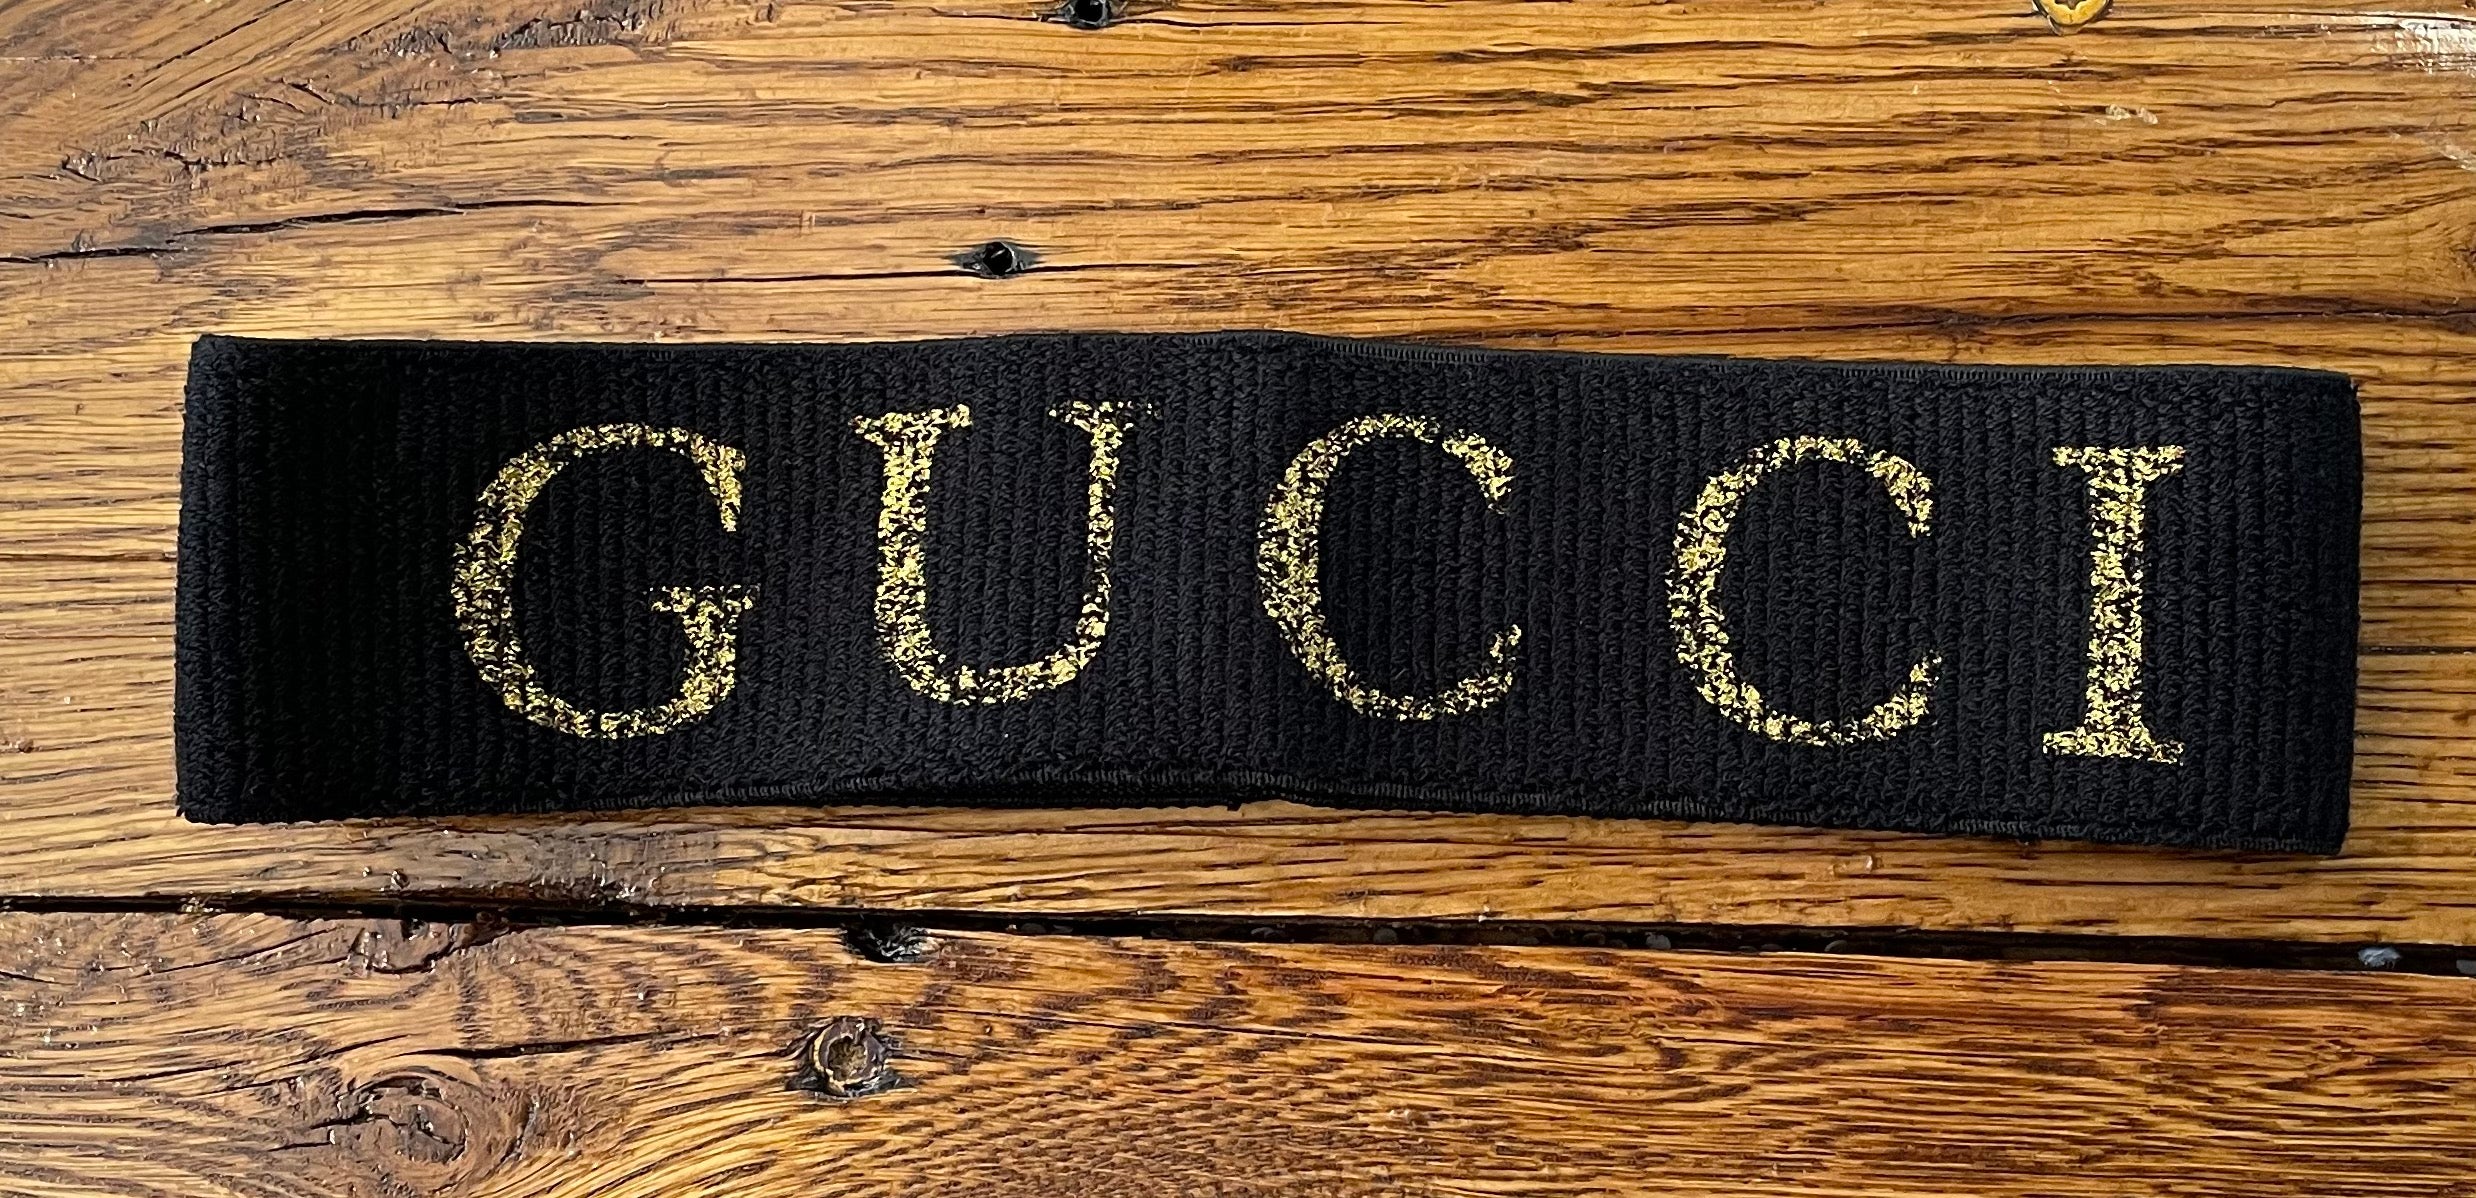 Gucci Dupe Headband